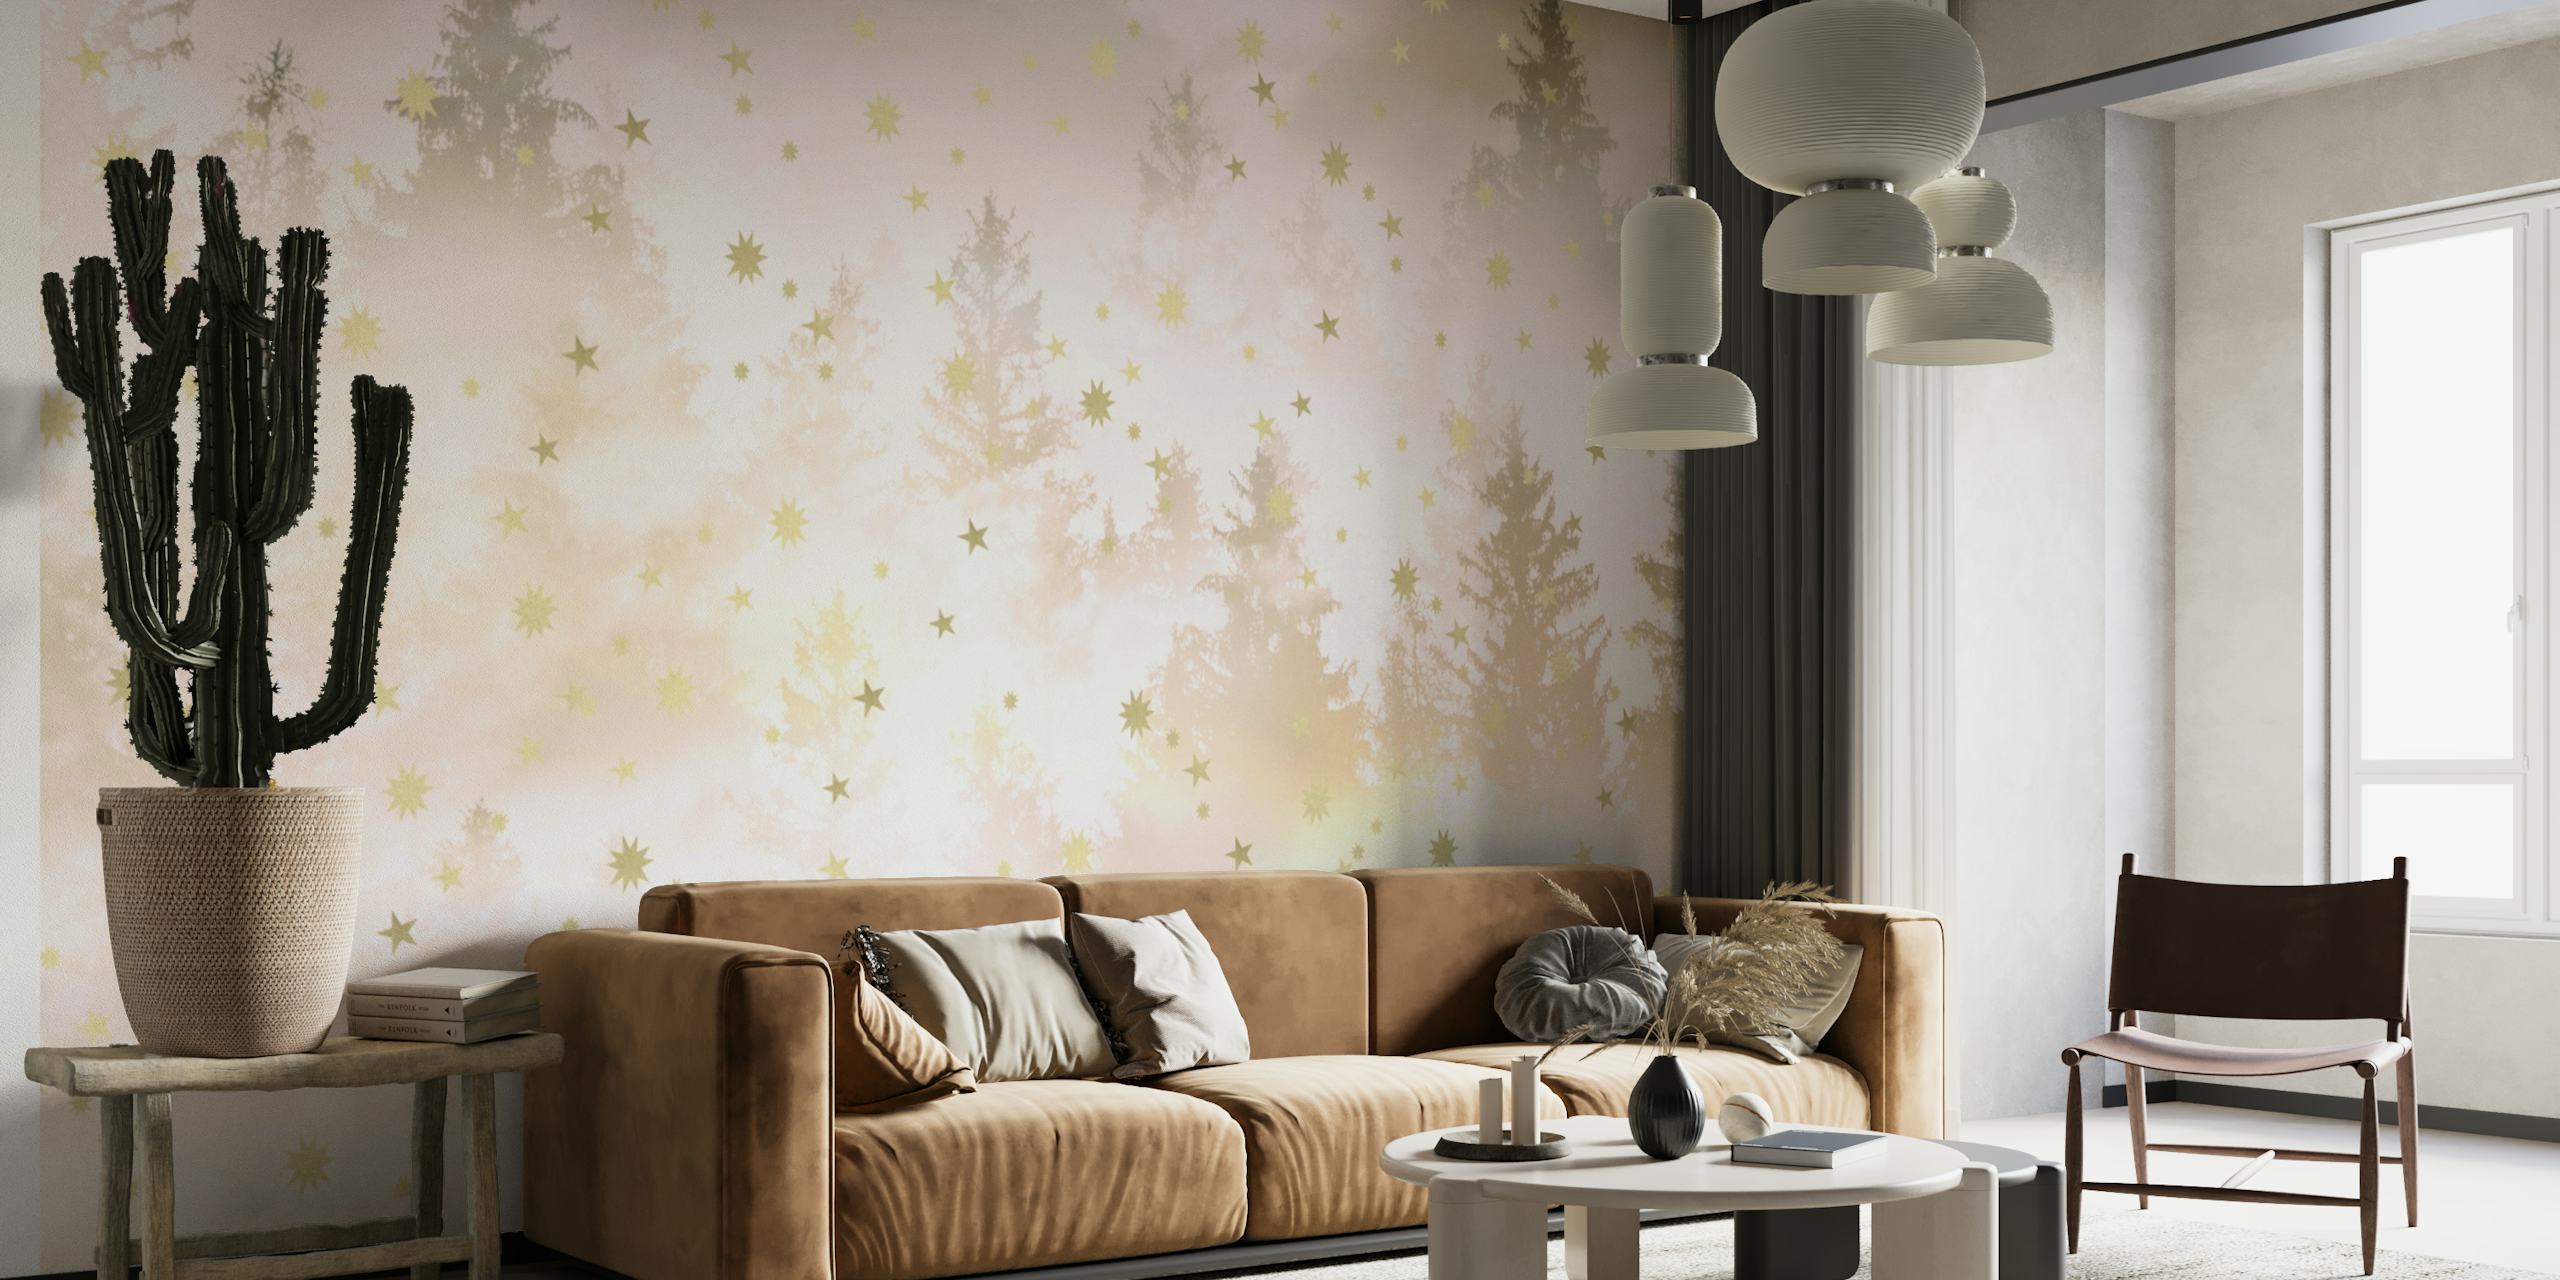 Starry Blush White Forest 1 wallpaper